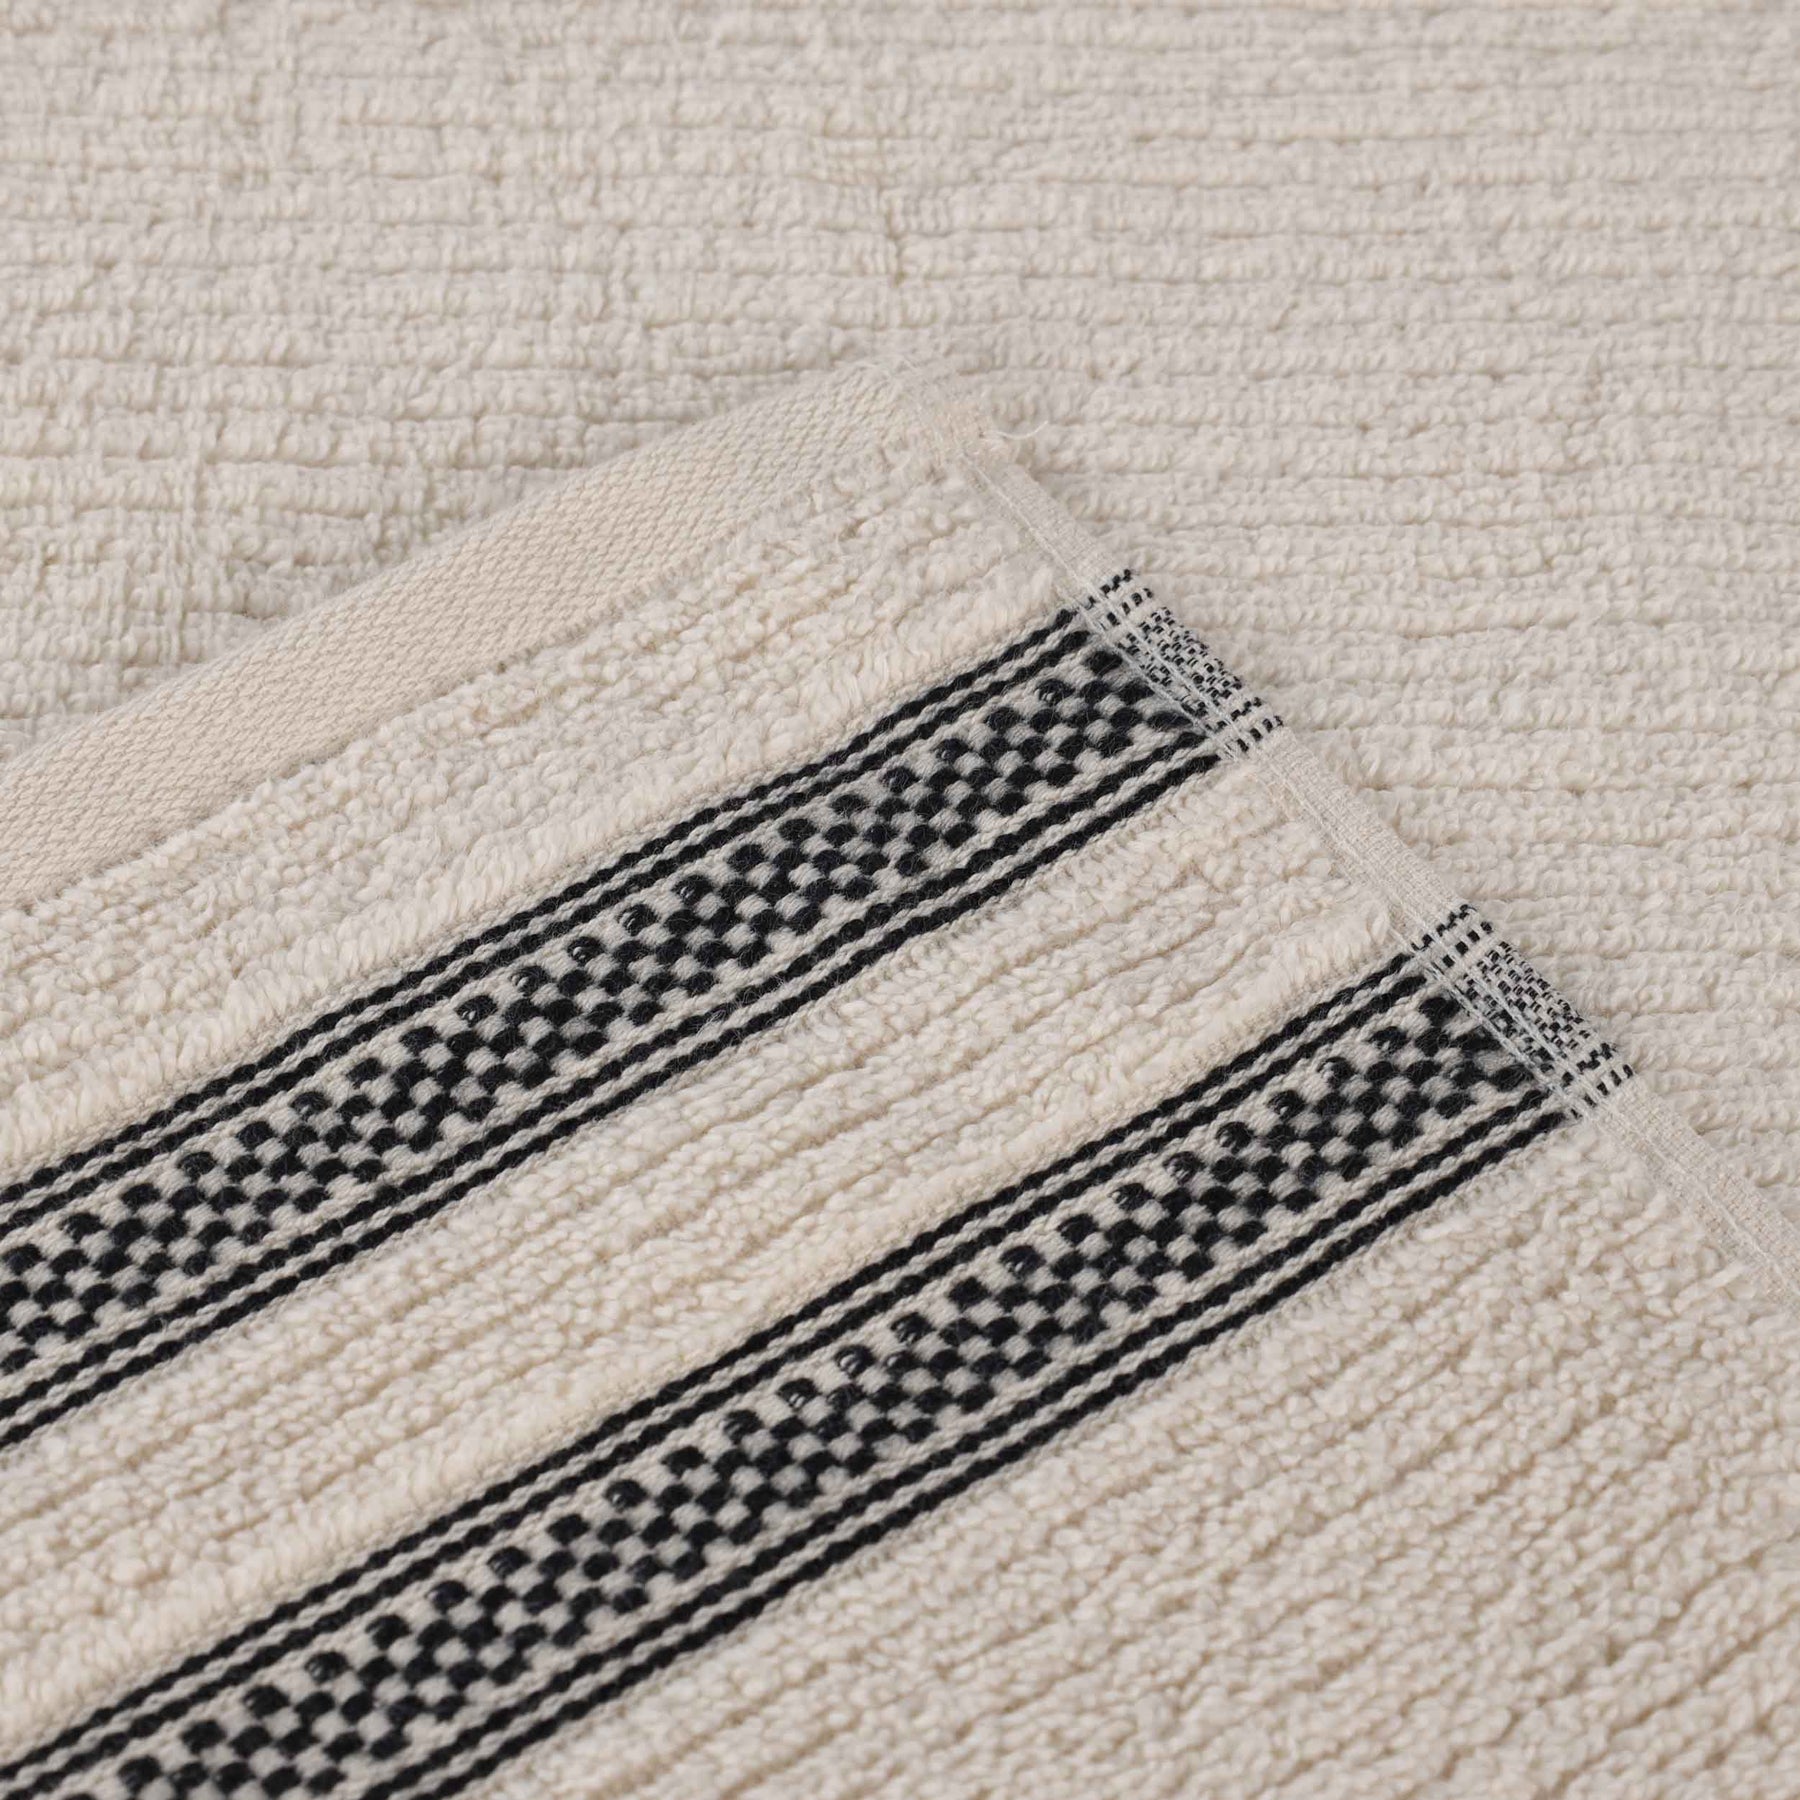 Ribbed White Bath Towels - 100% Cotton Towel Sets for Bathroom, Zero Twist,  Soft